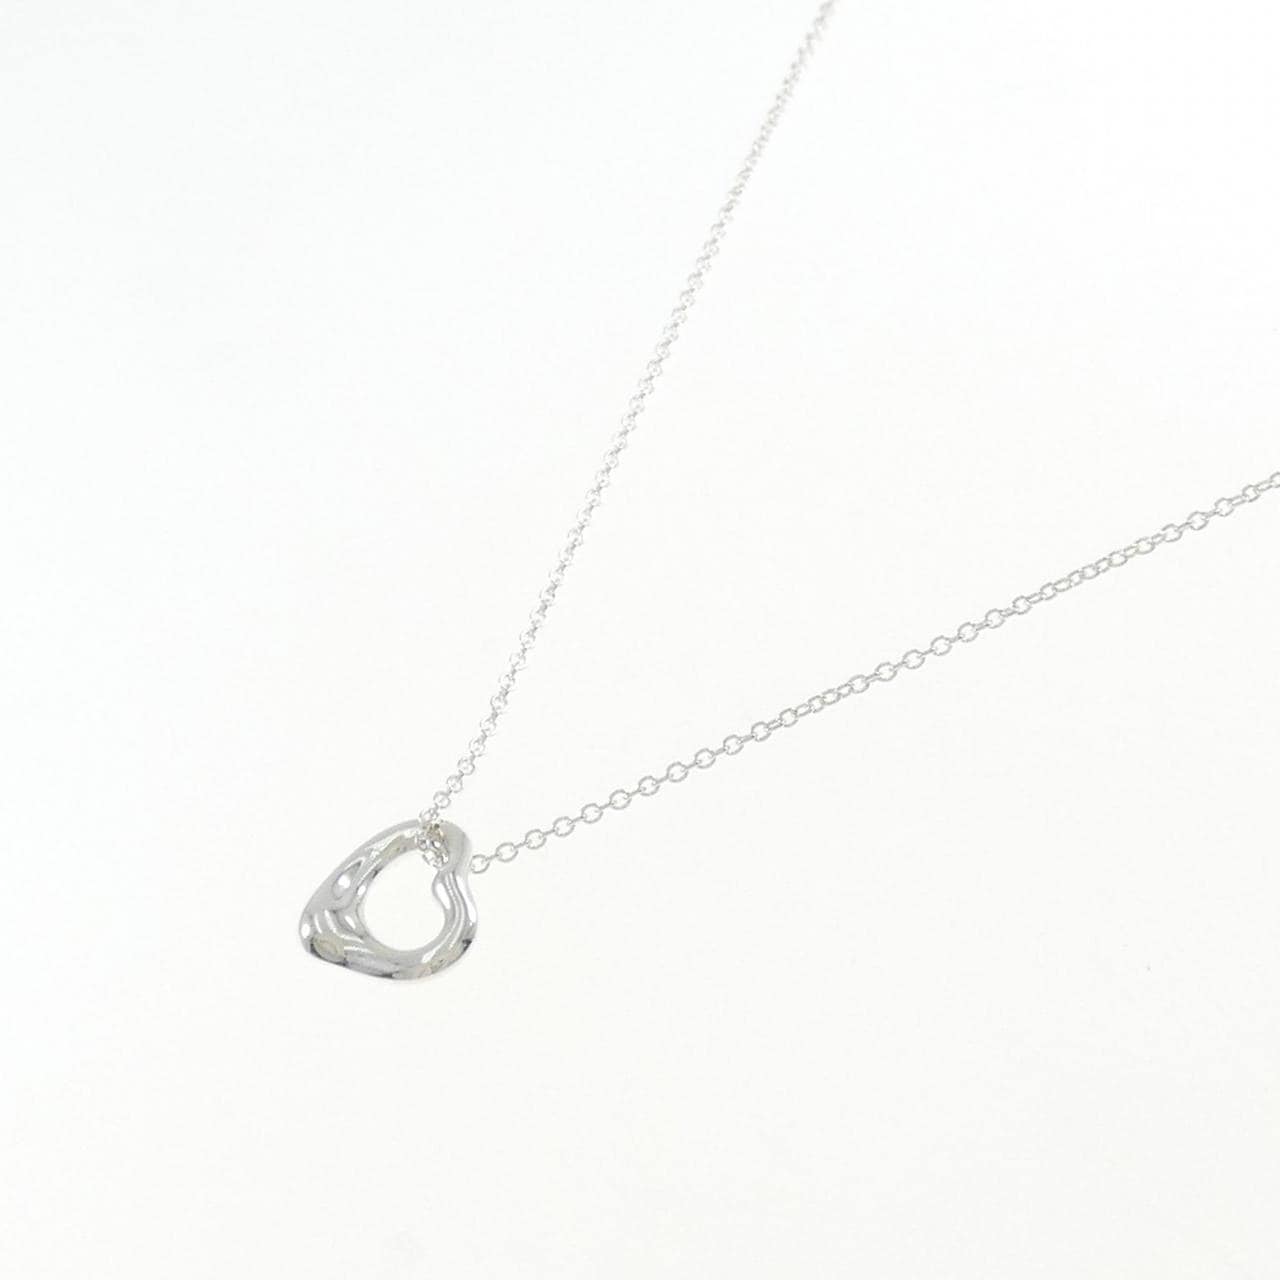 TIFFANY open heart necklace